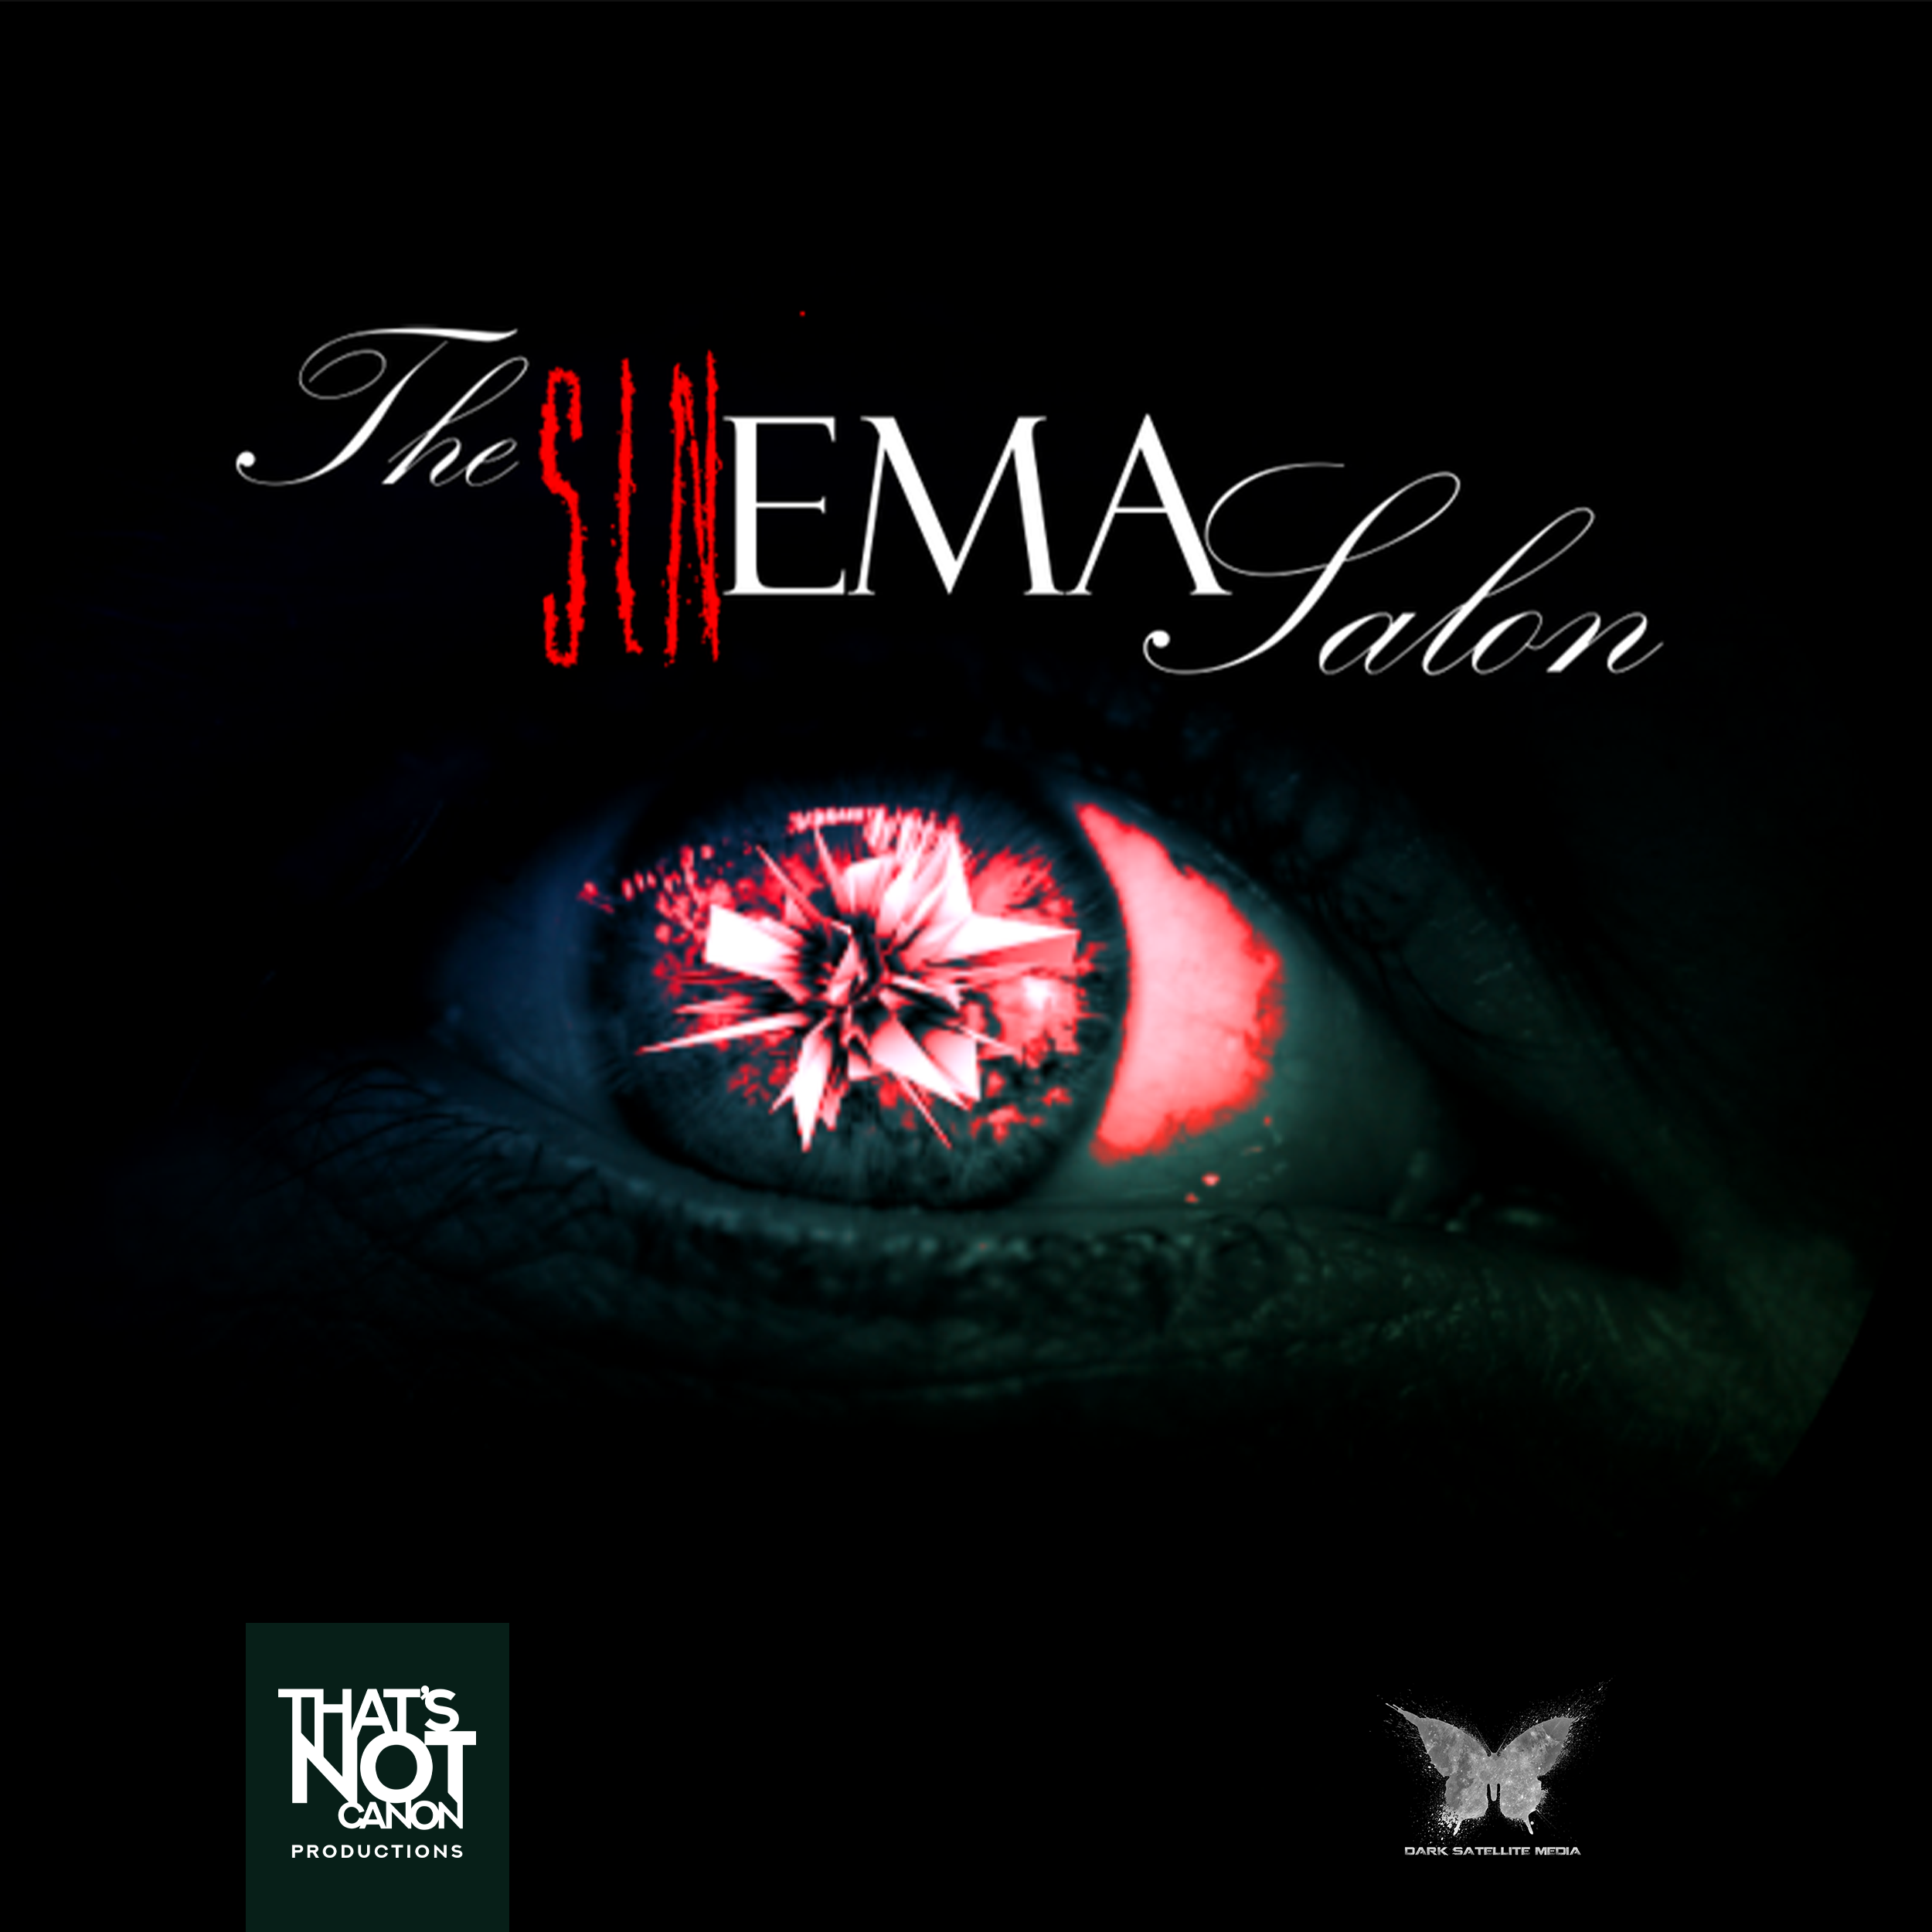 The Sinema Salon LOGO.png